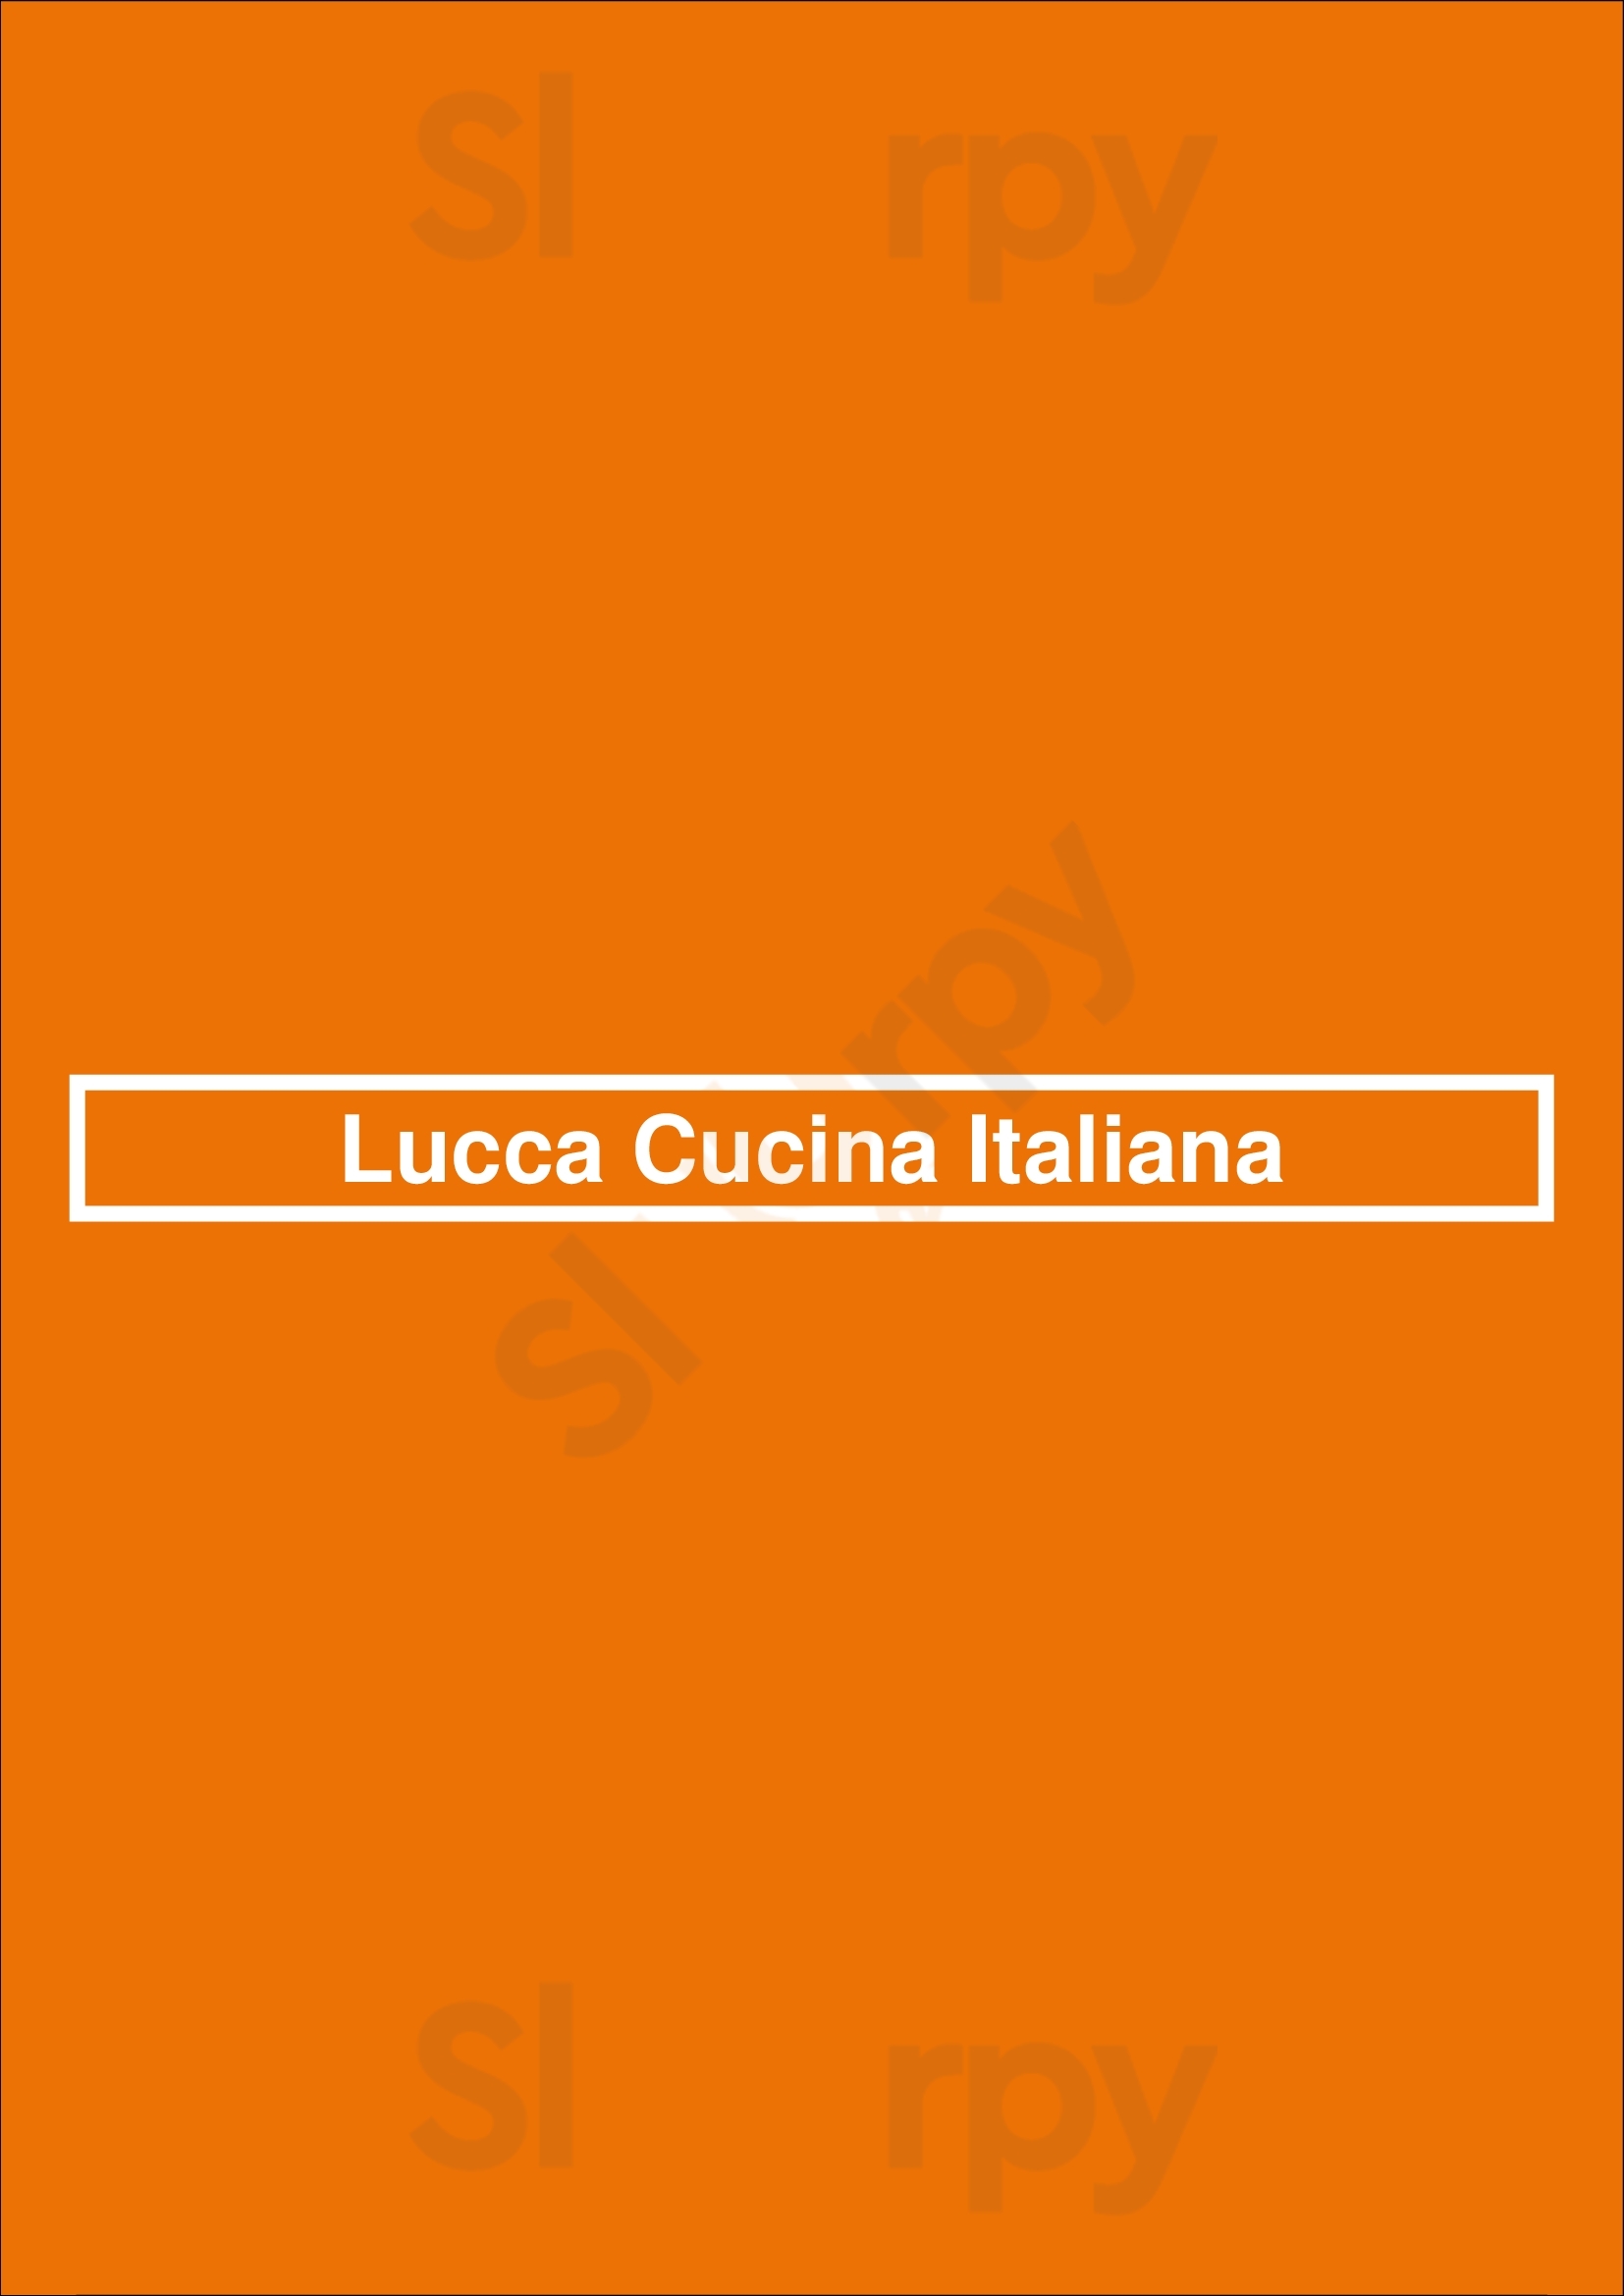 Lucca Cucina Italiana Bruxelles Menu - 1